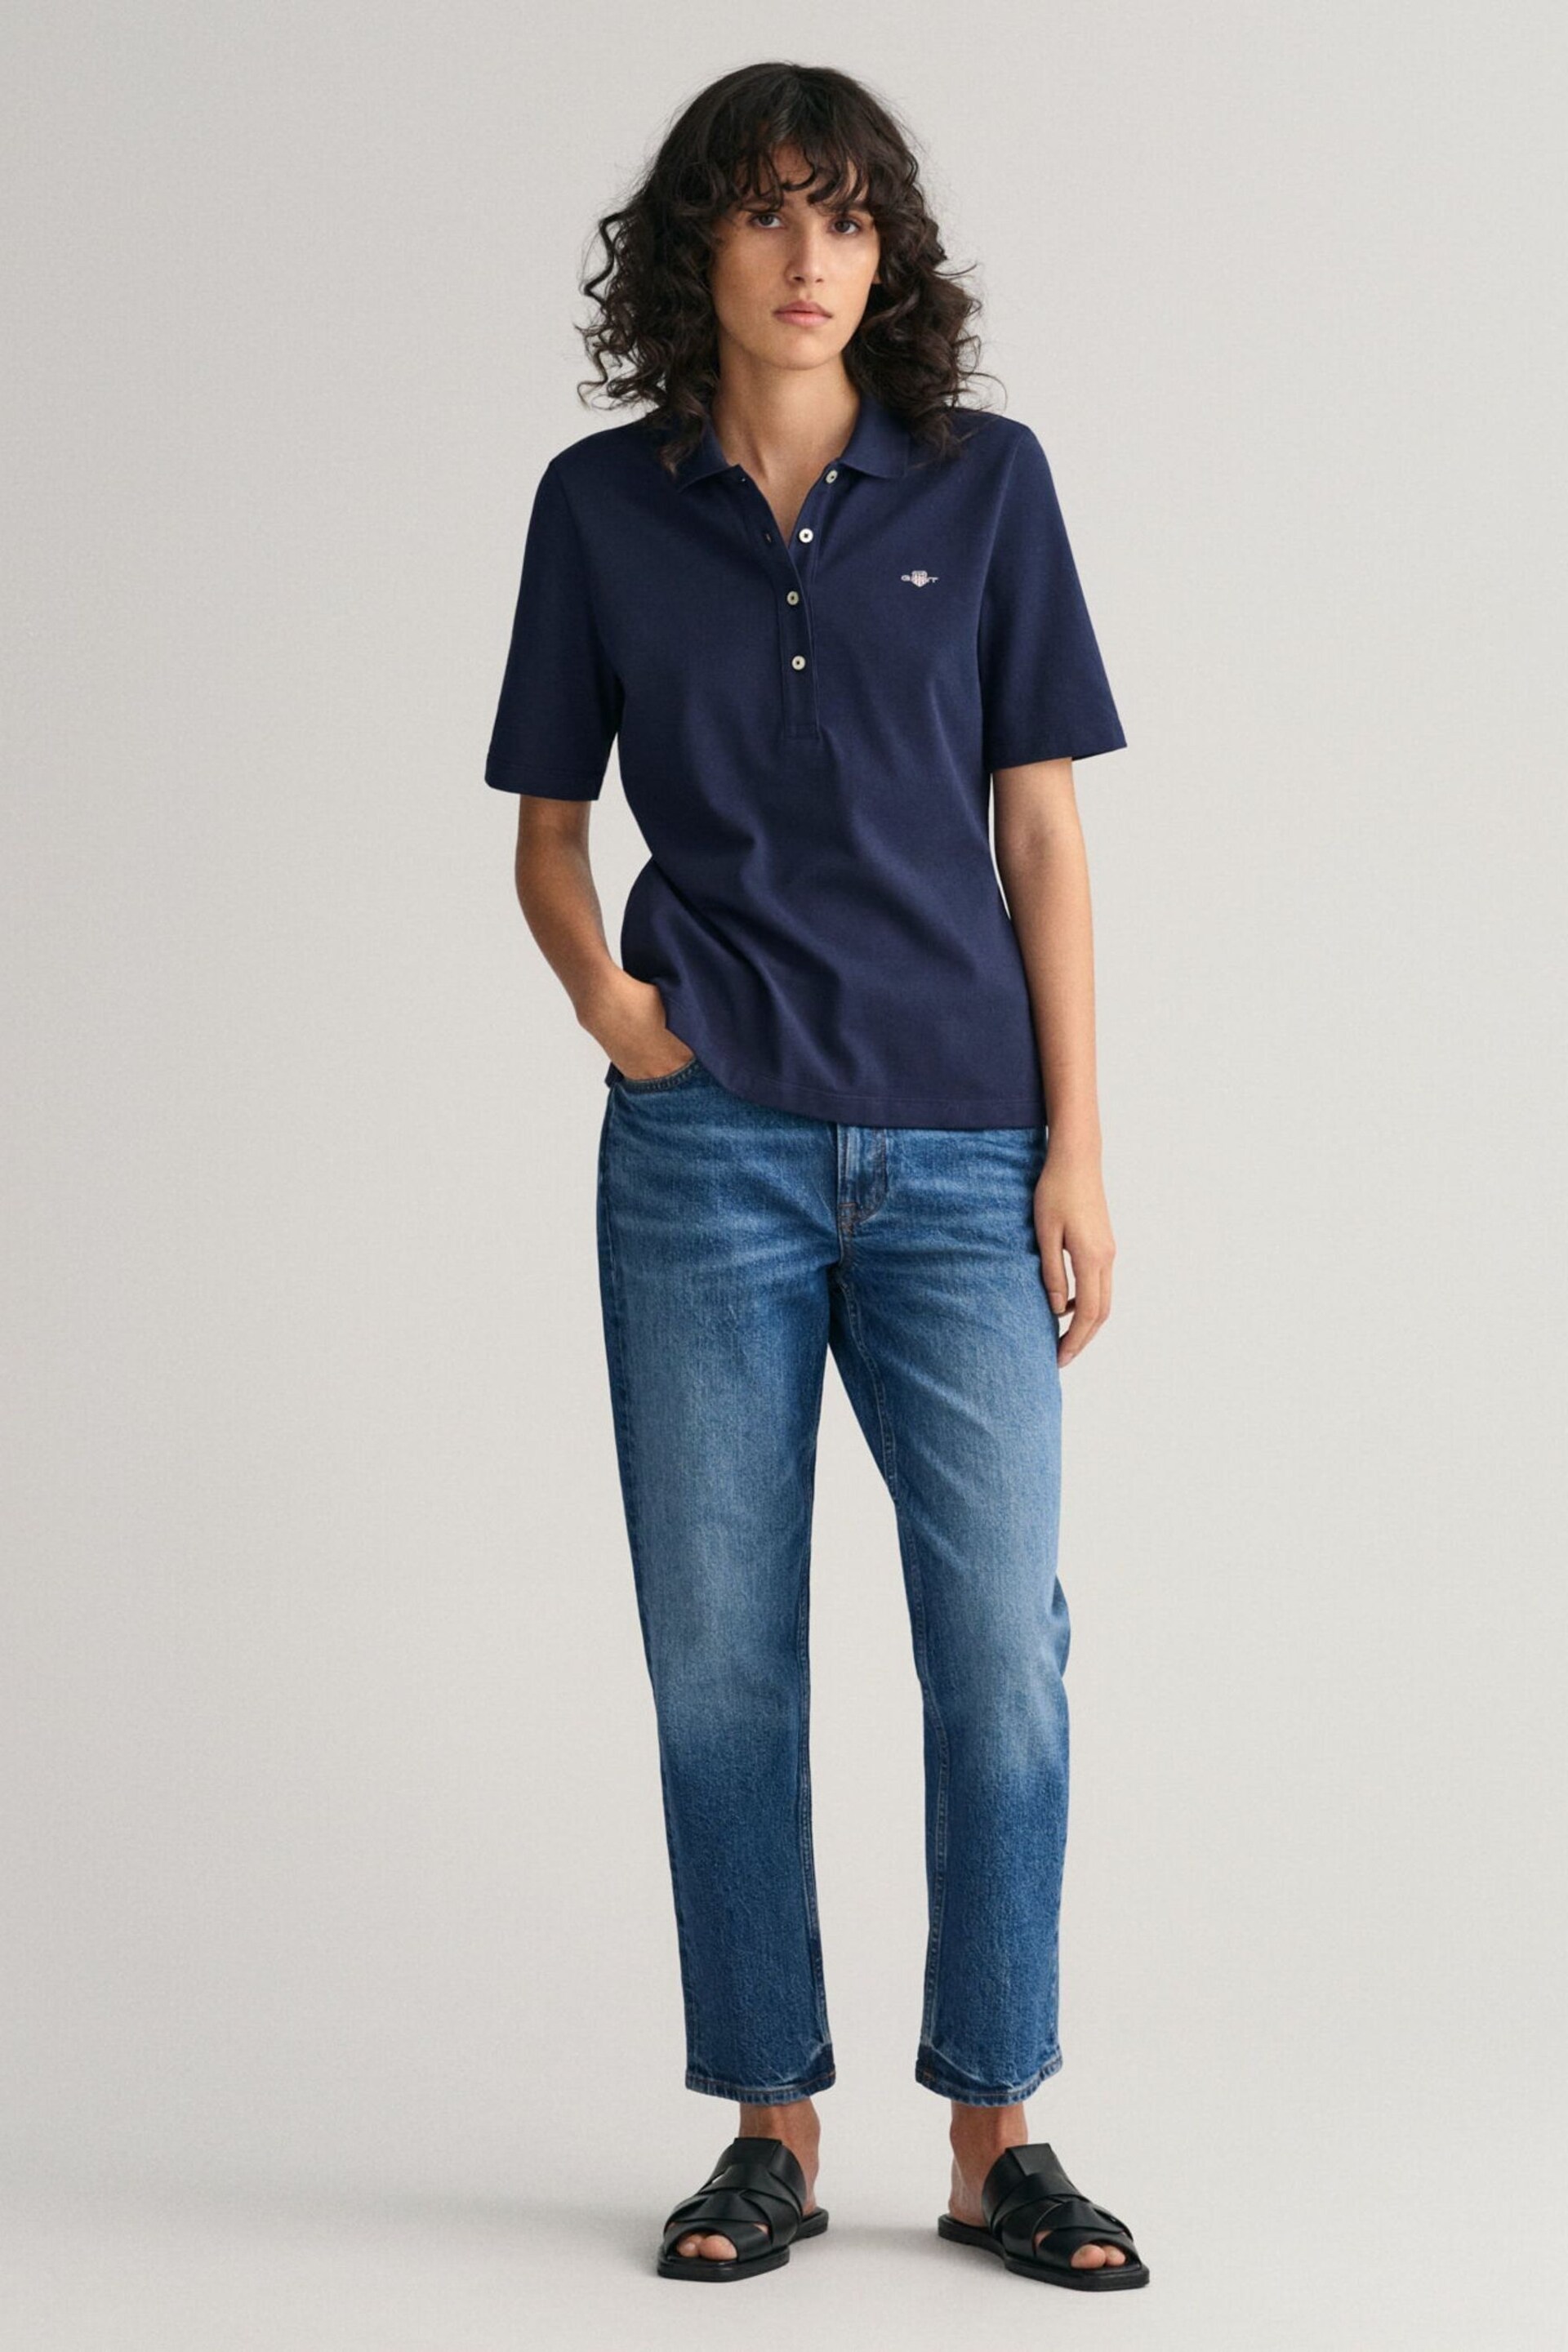 GANT Blue Slim Shield Pique Polo Shirt - Image 1 of 4